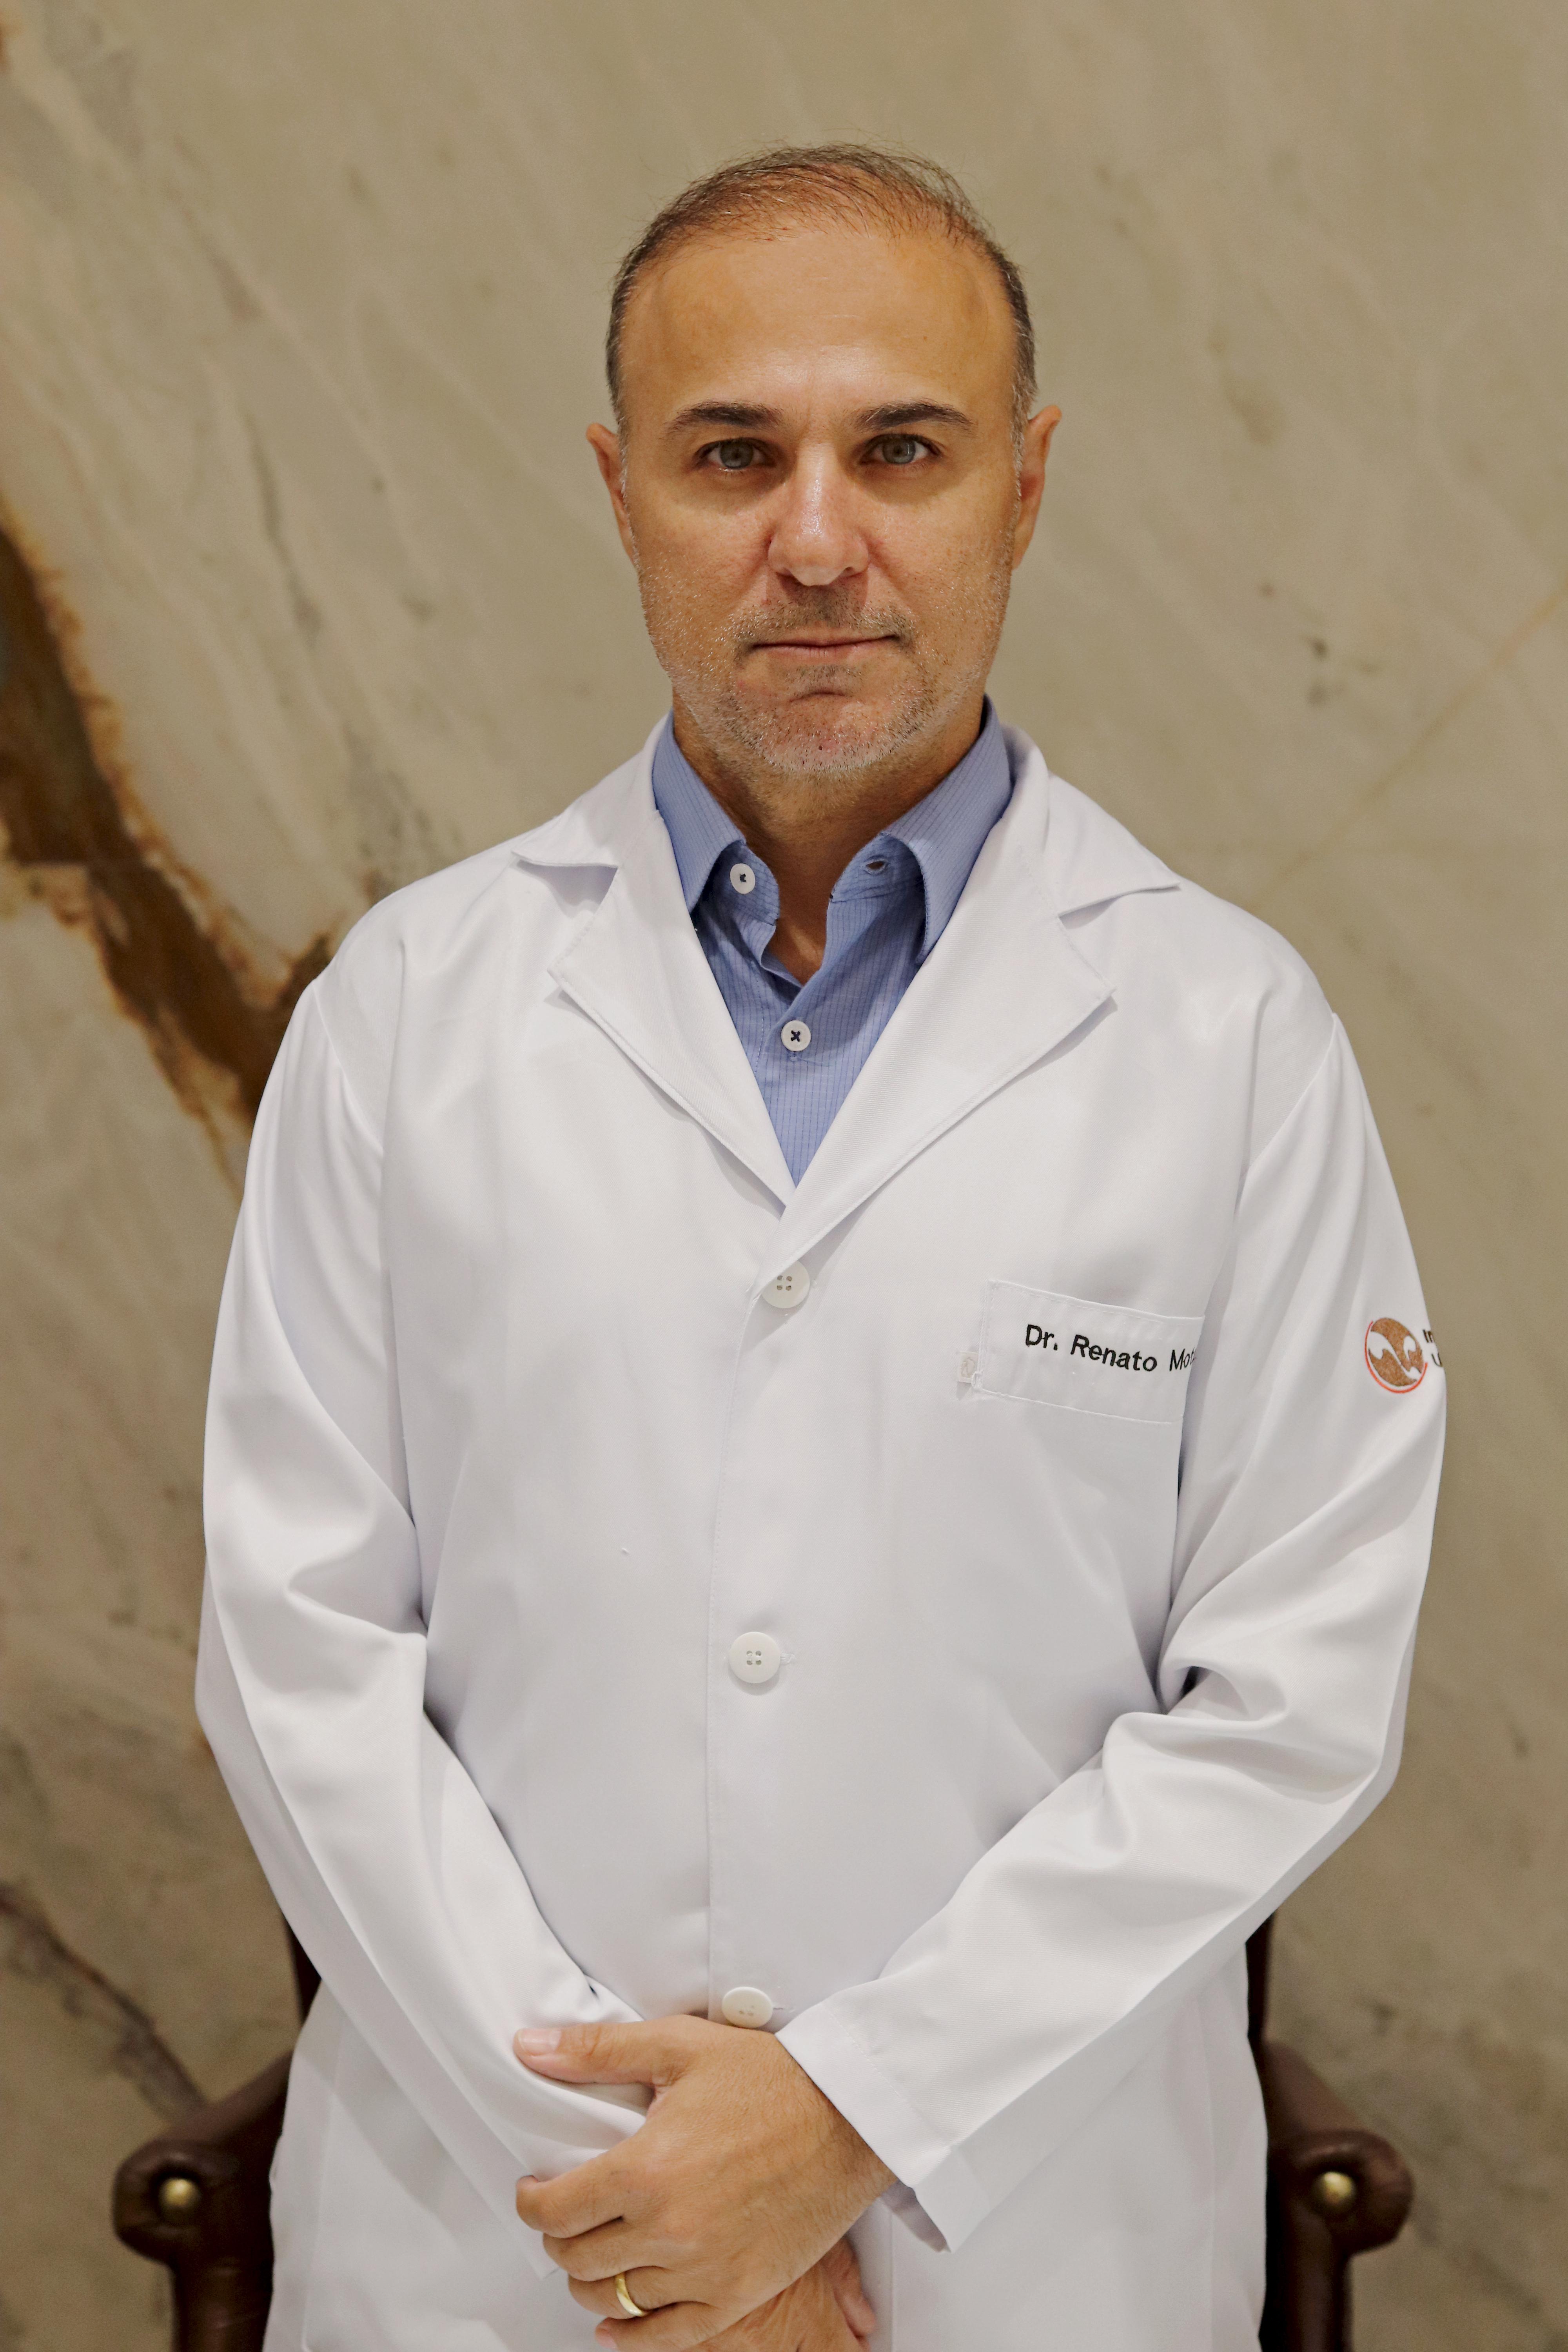 Dr. Renato Quintino Nobre Mota